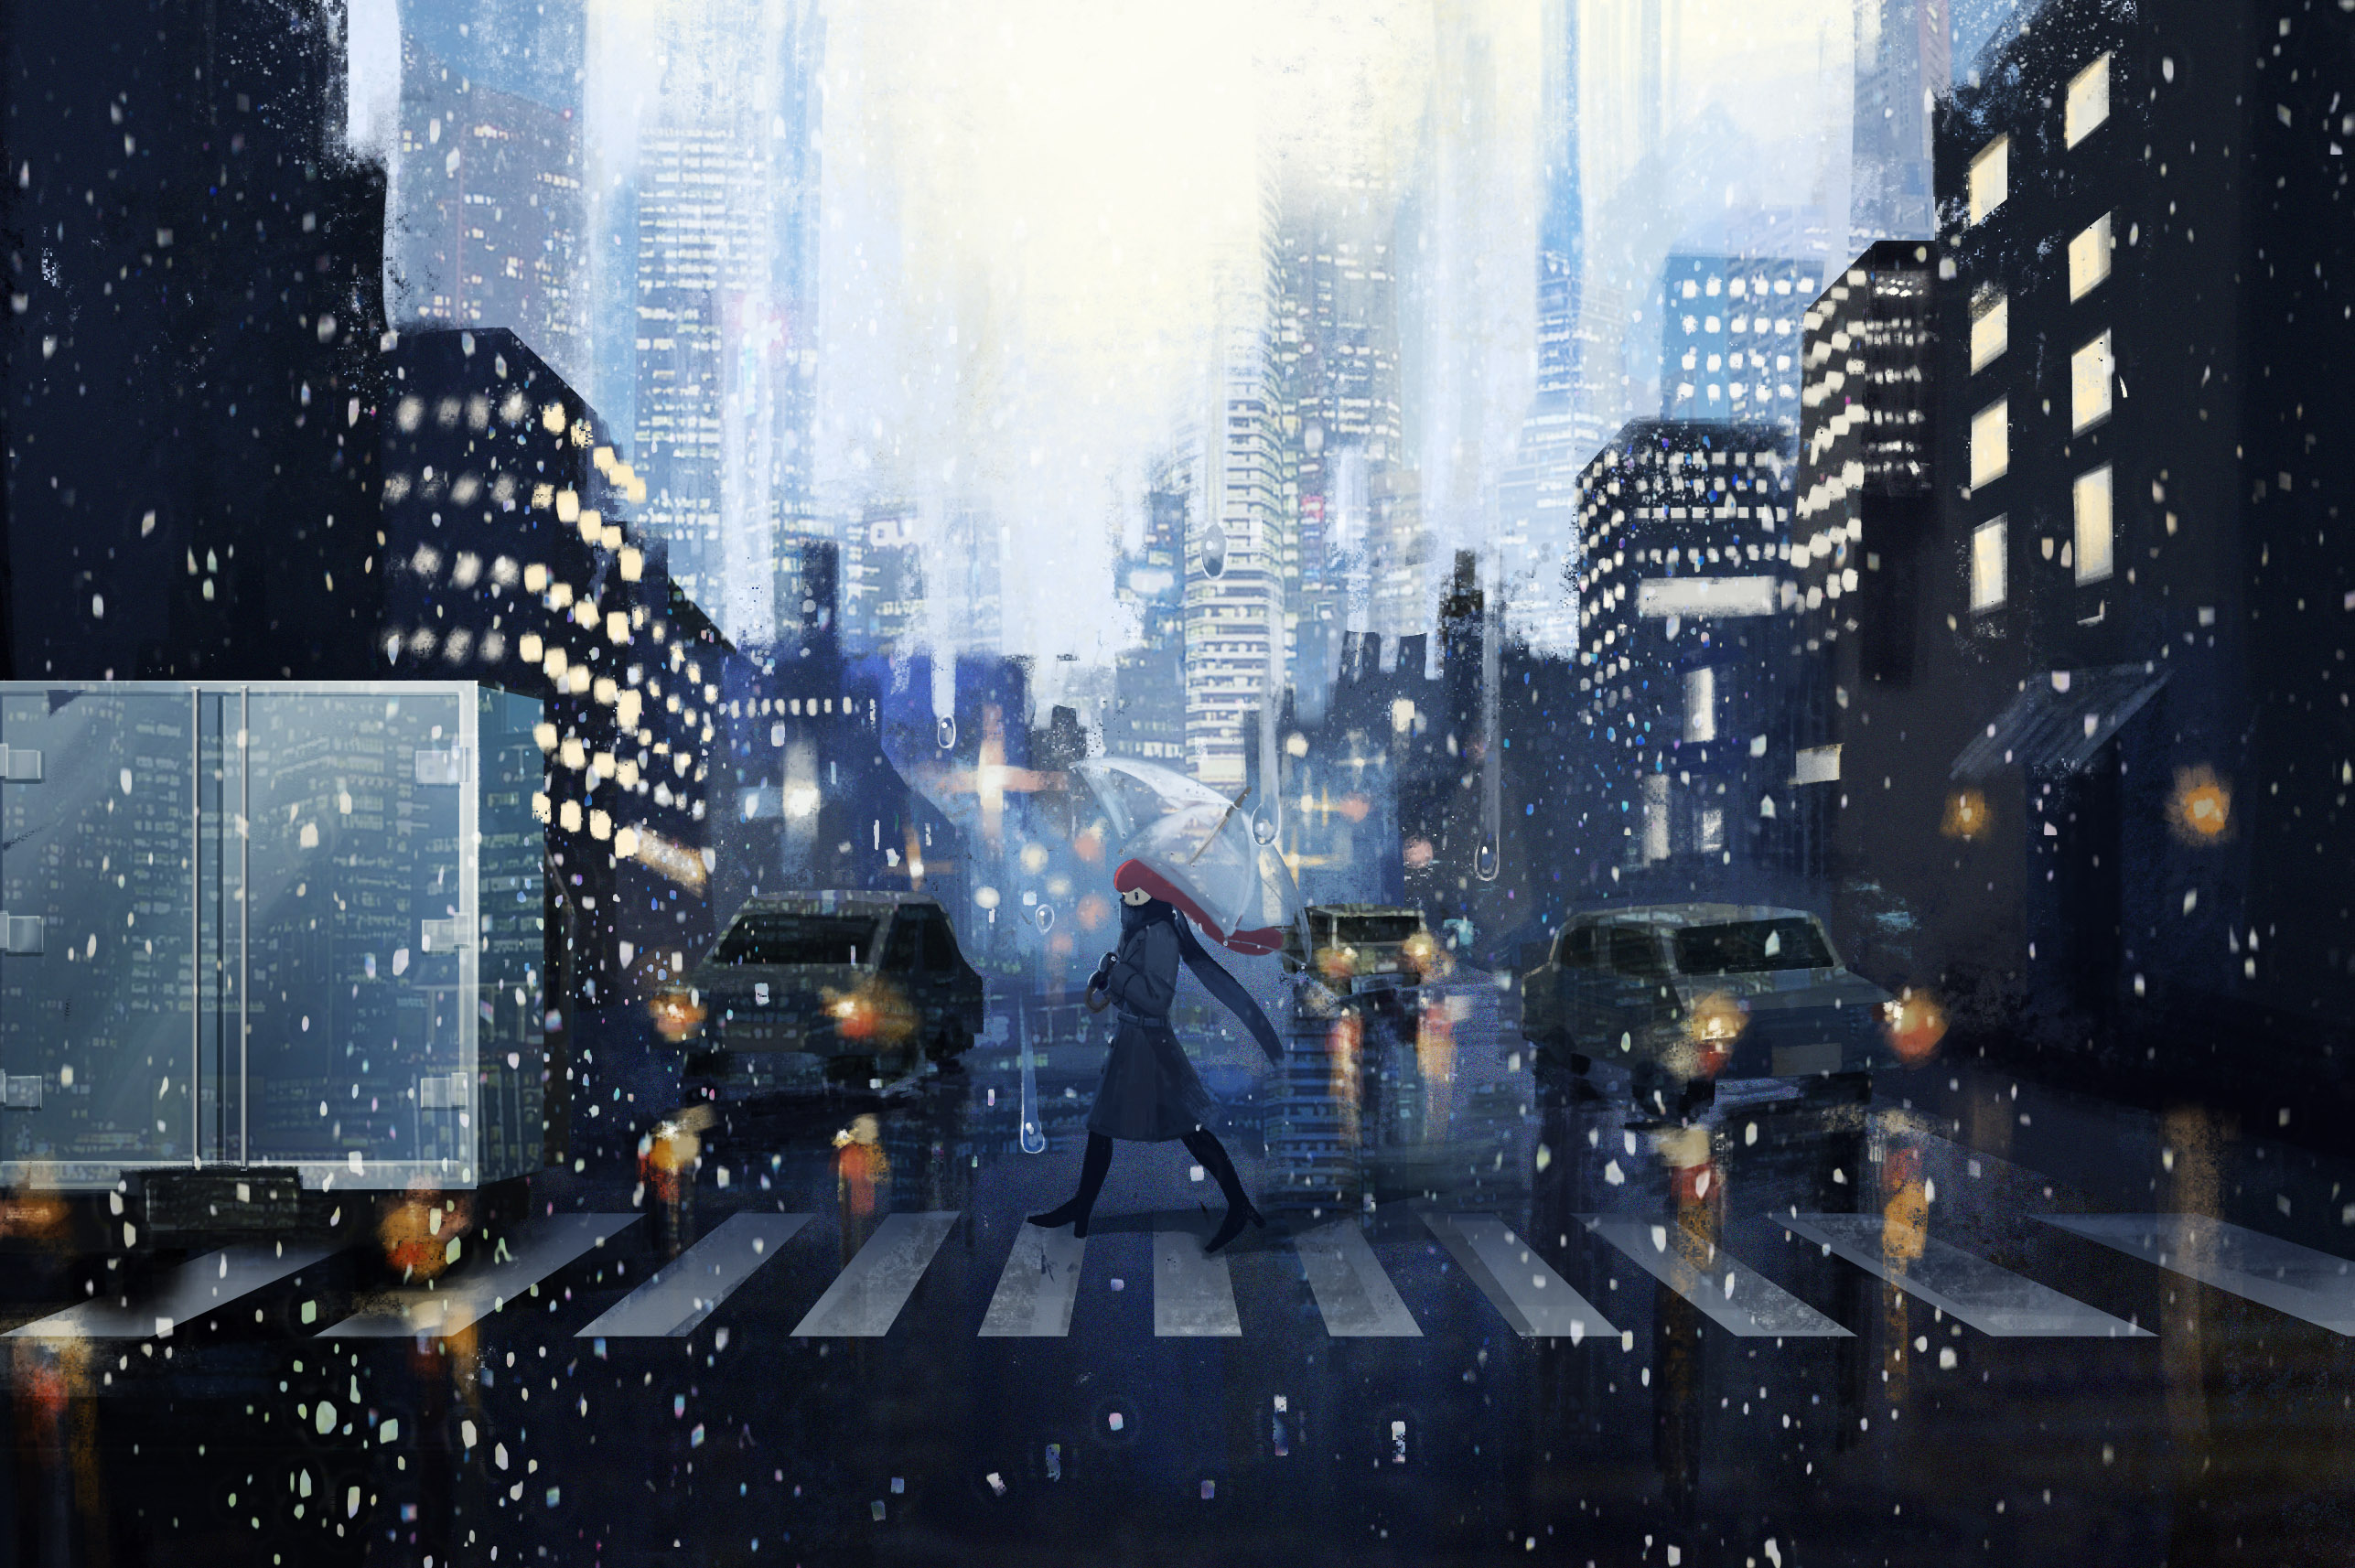 Anime Girl Crossing the Road in the Rain